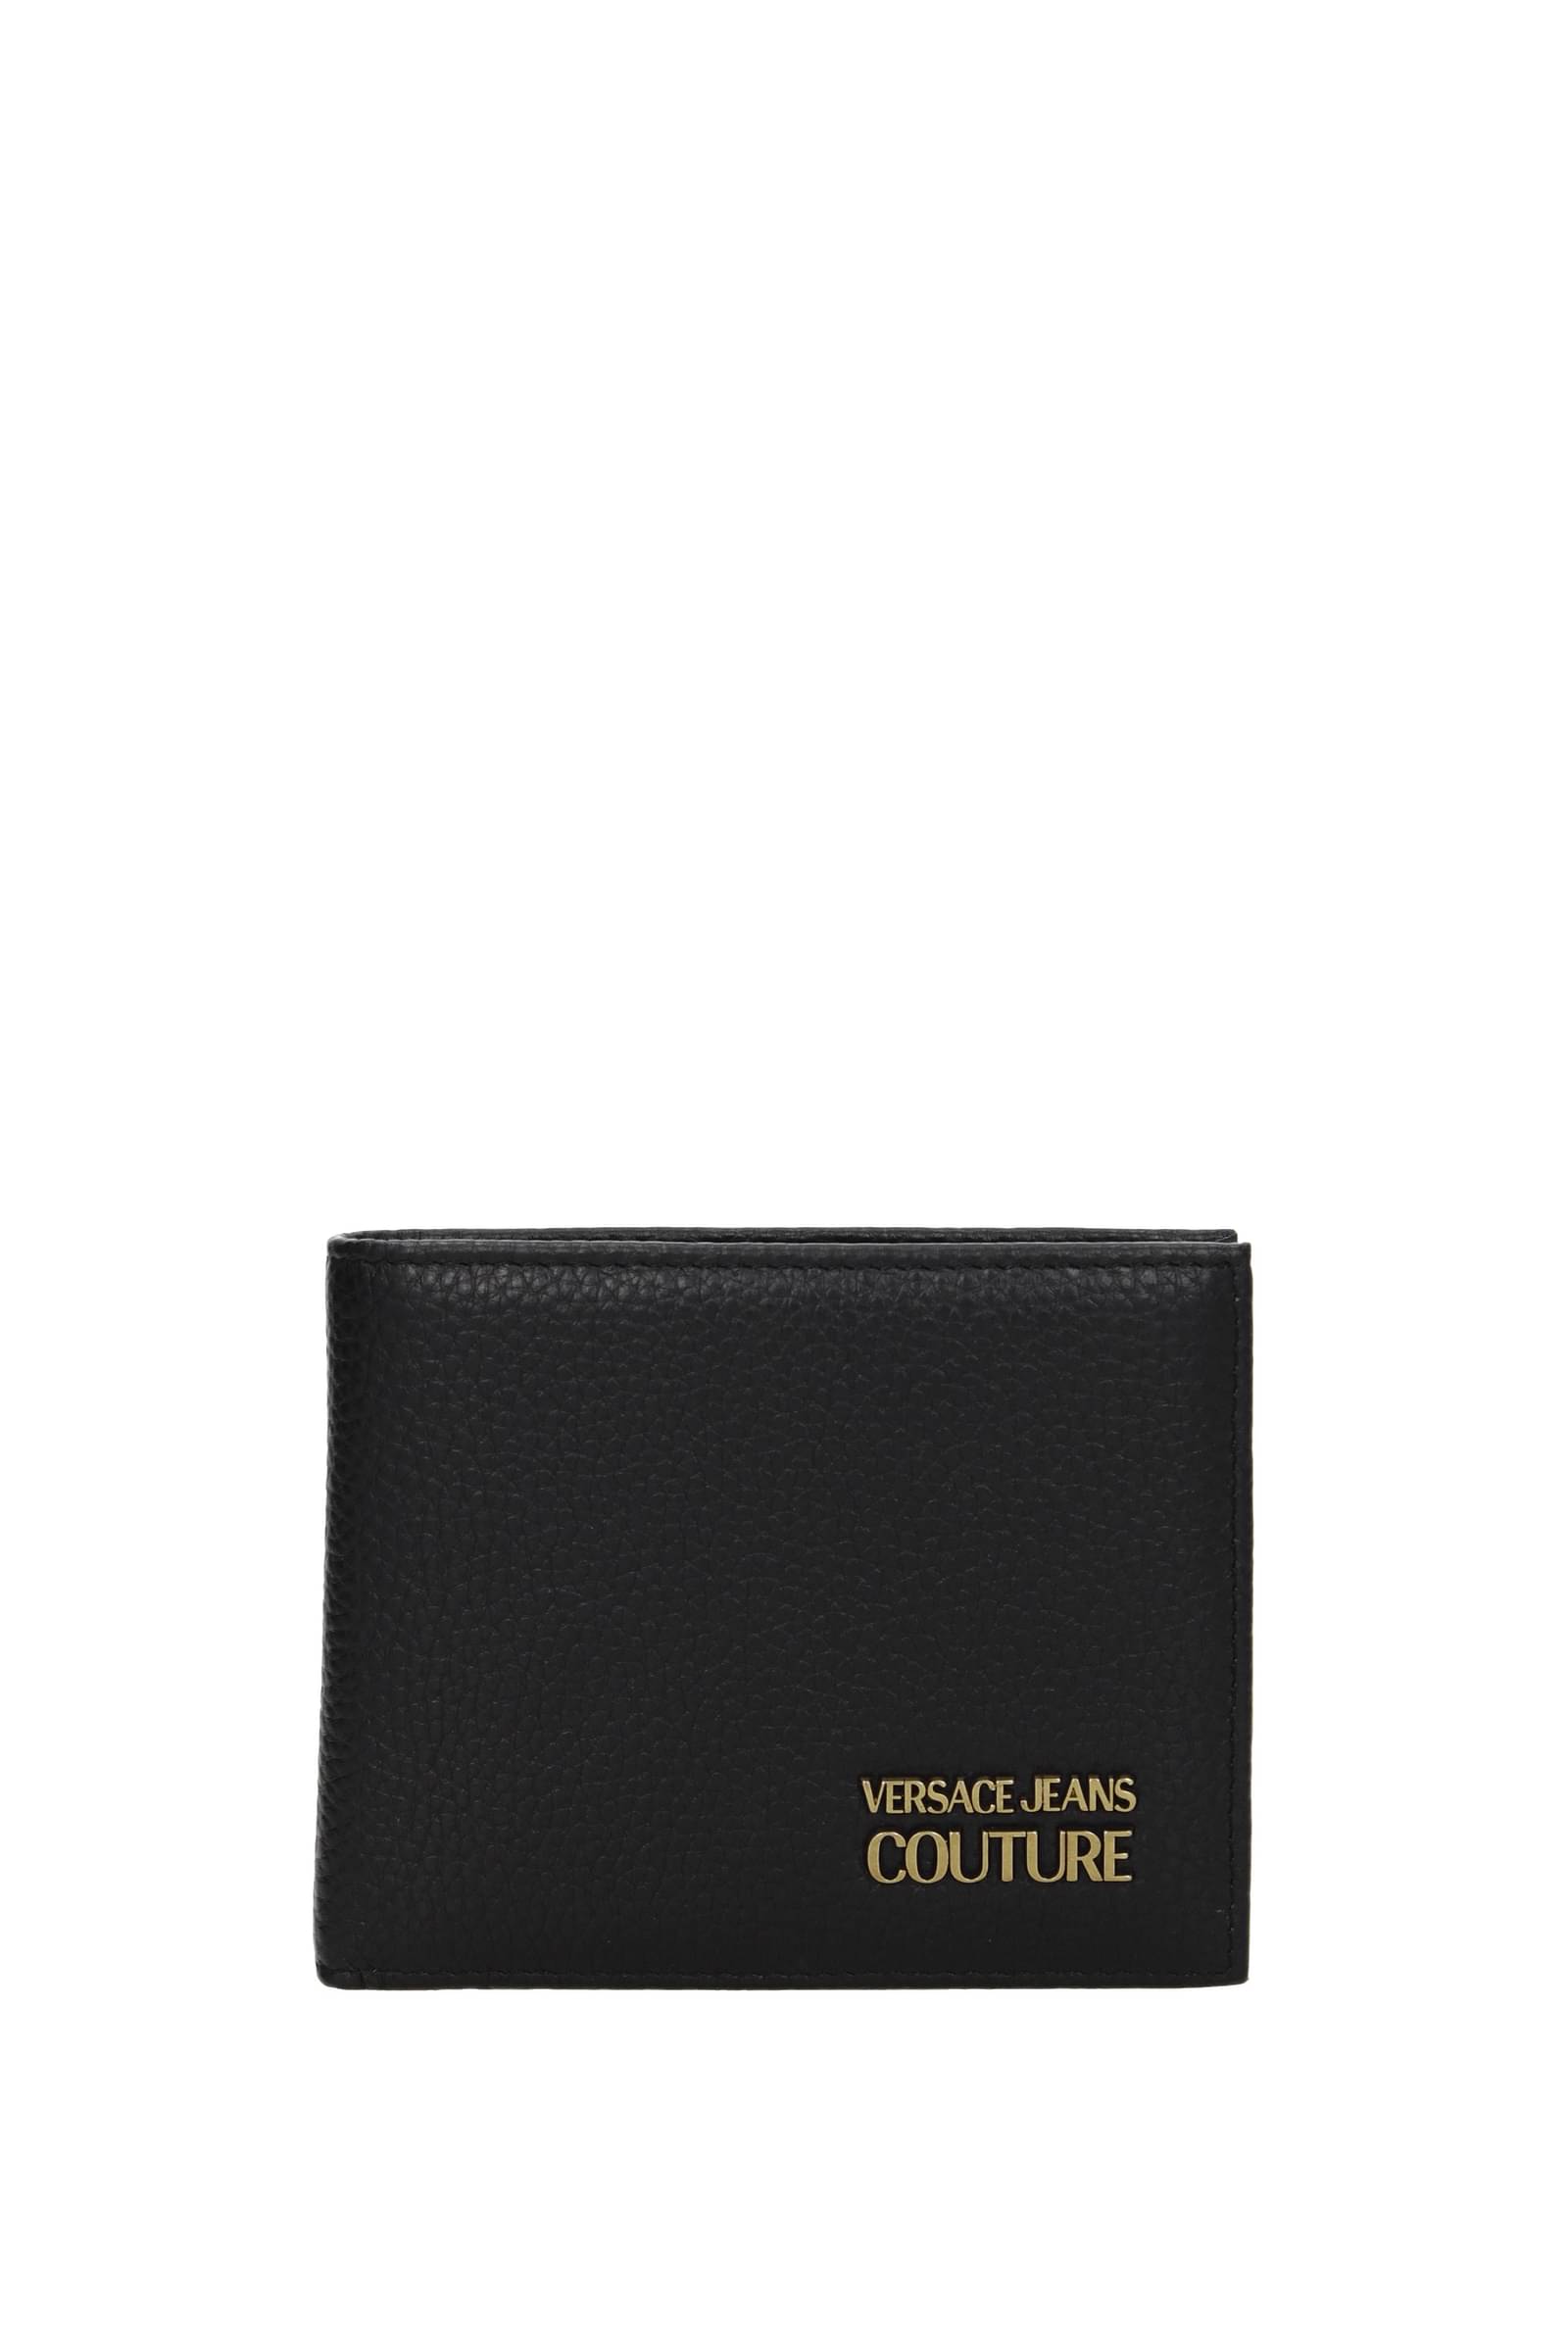 Versace Jeans Couture logo-plaque Leather Wallet - Farfetch